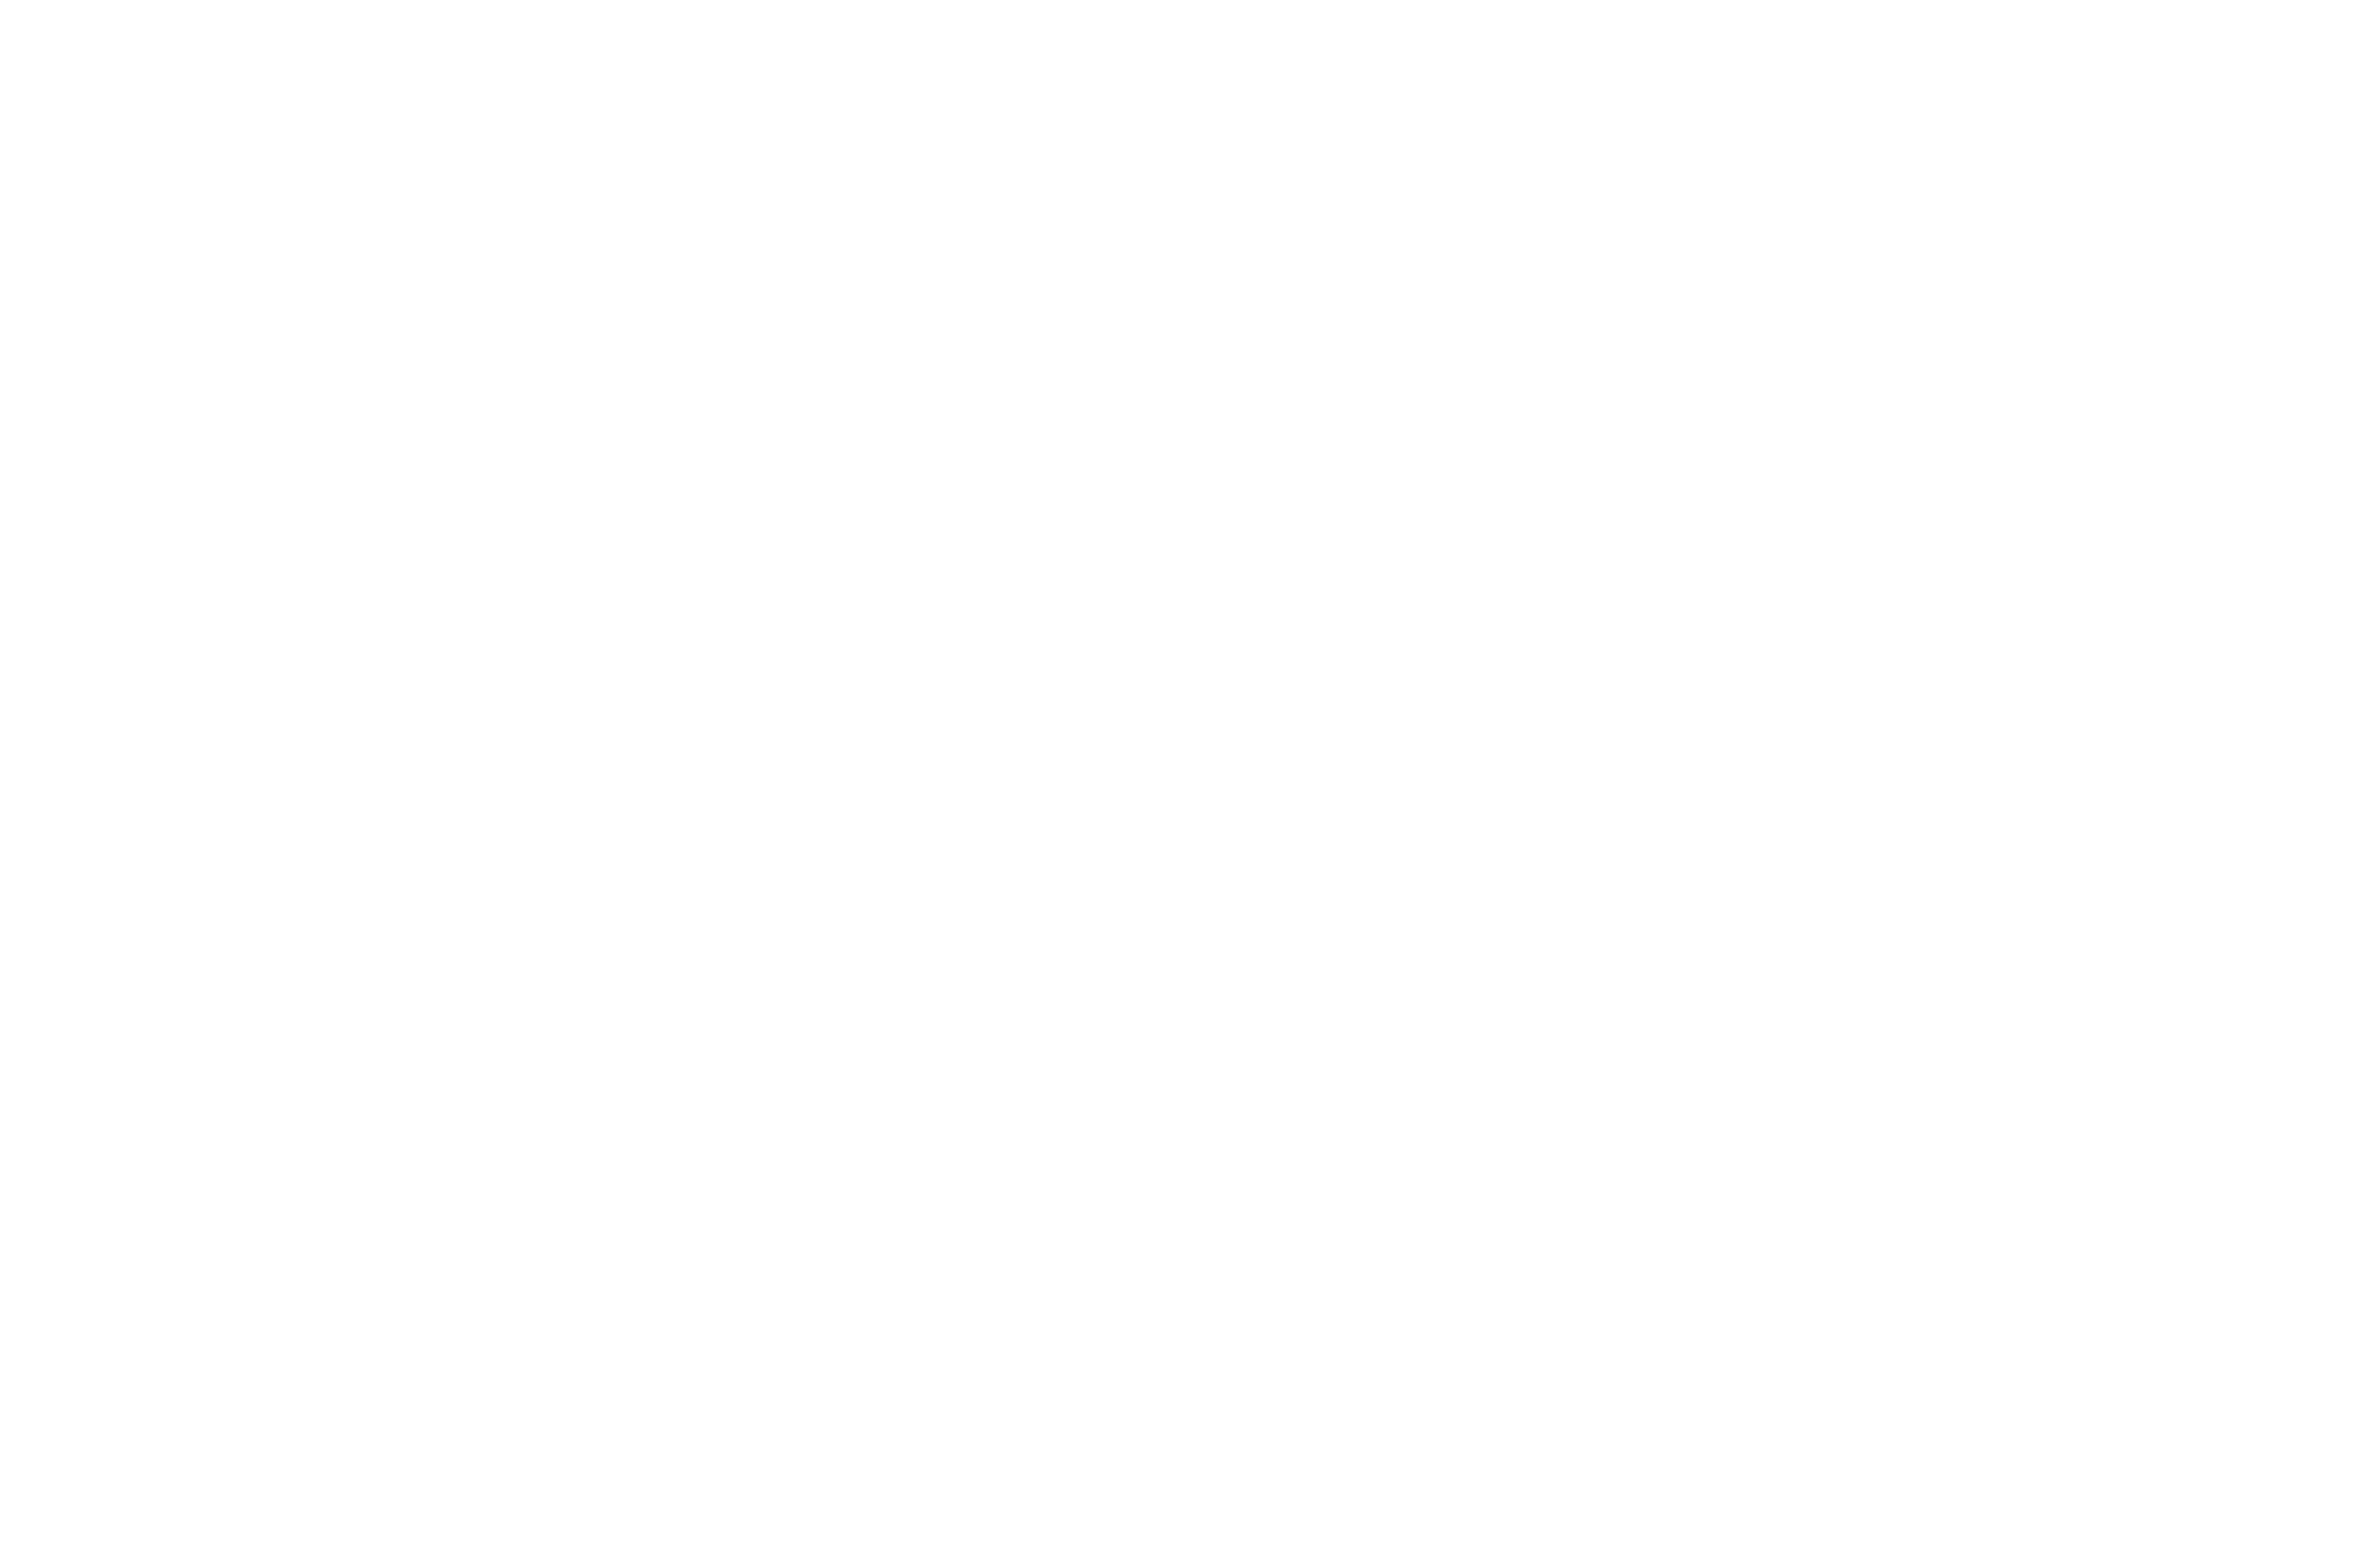 OFFICIALSELECTION-DCIndependentFilmFestivalDCIFF-2024 (1)